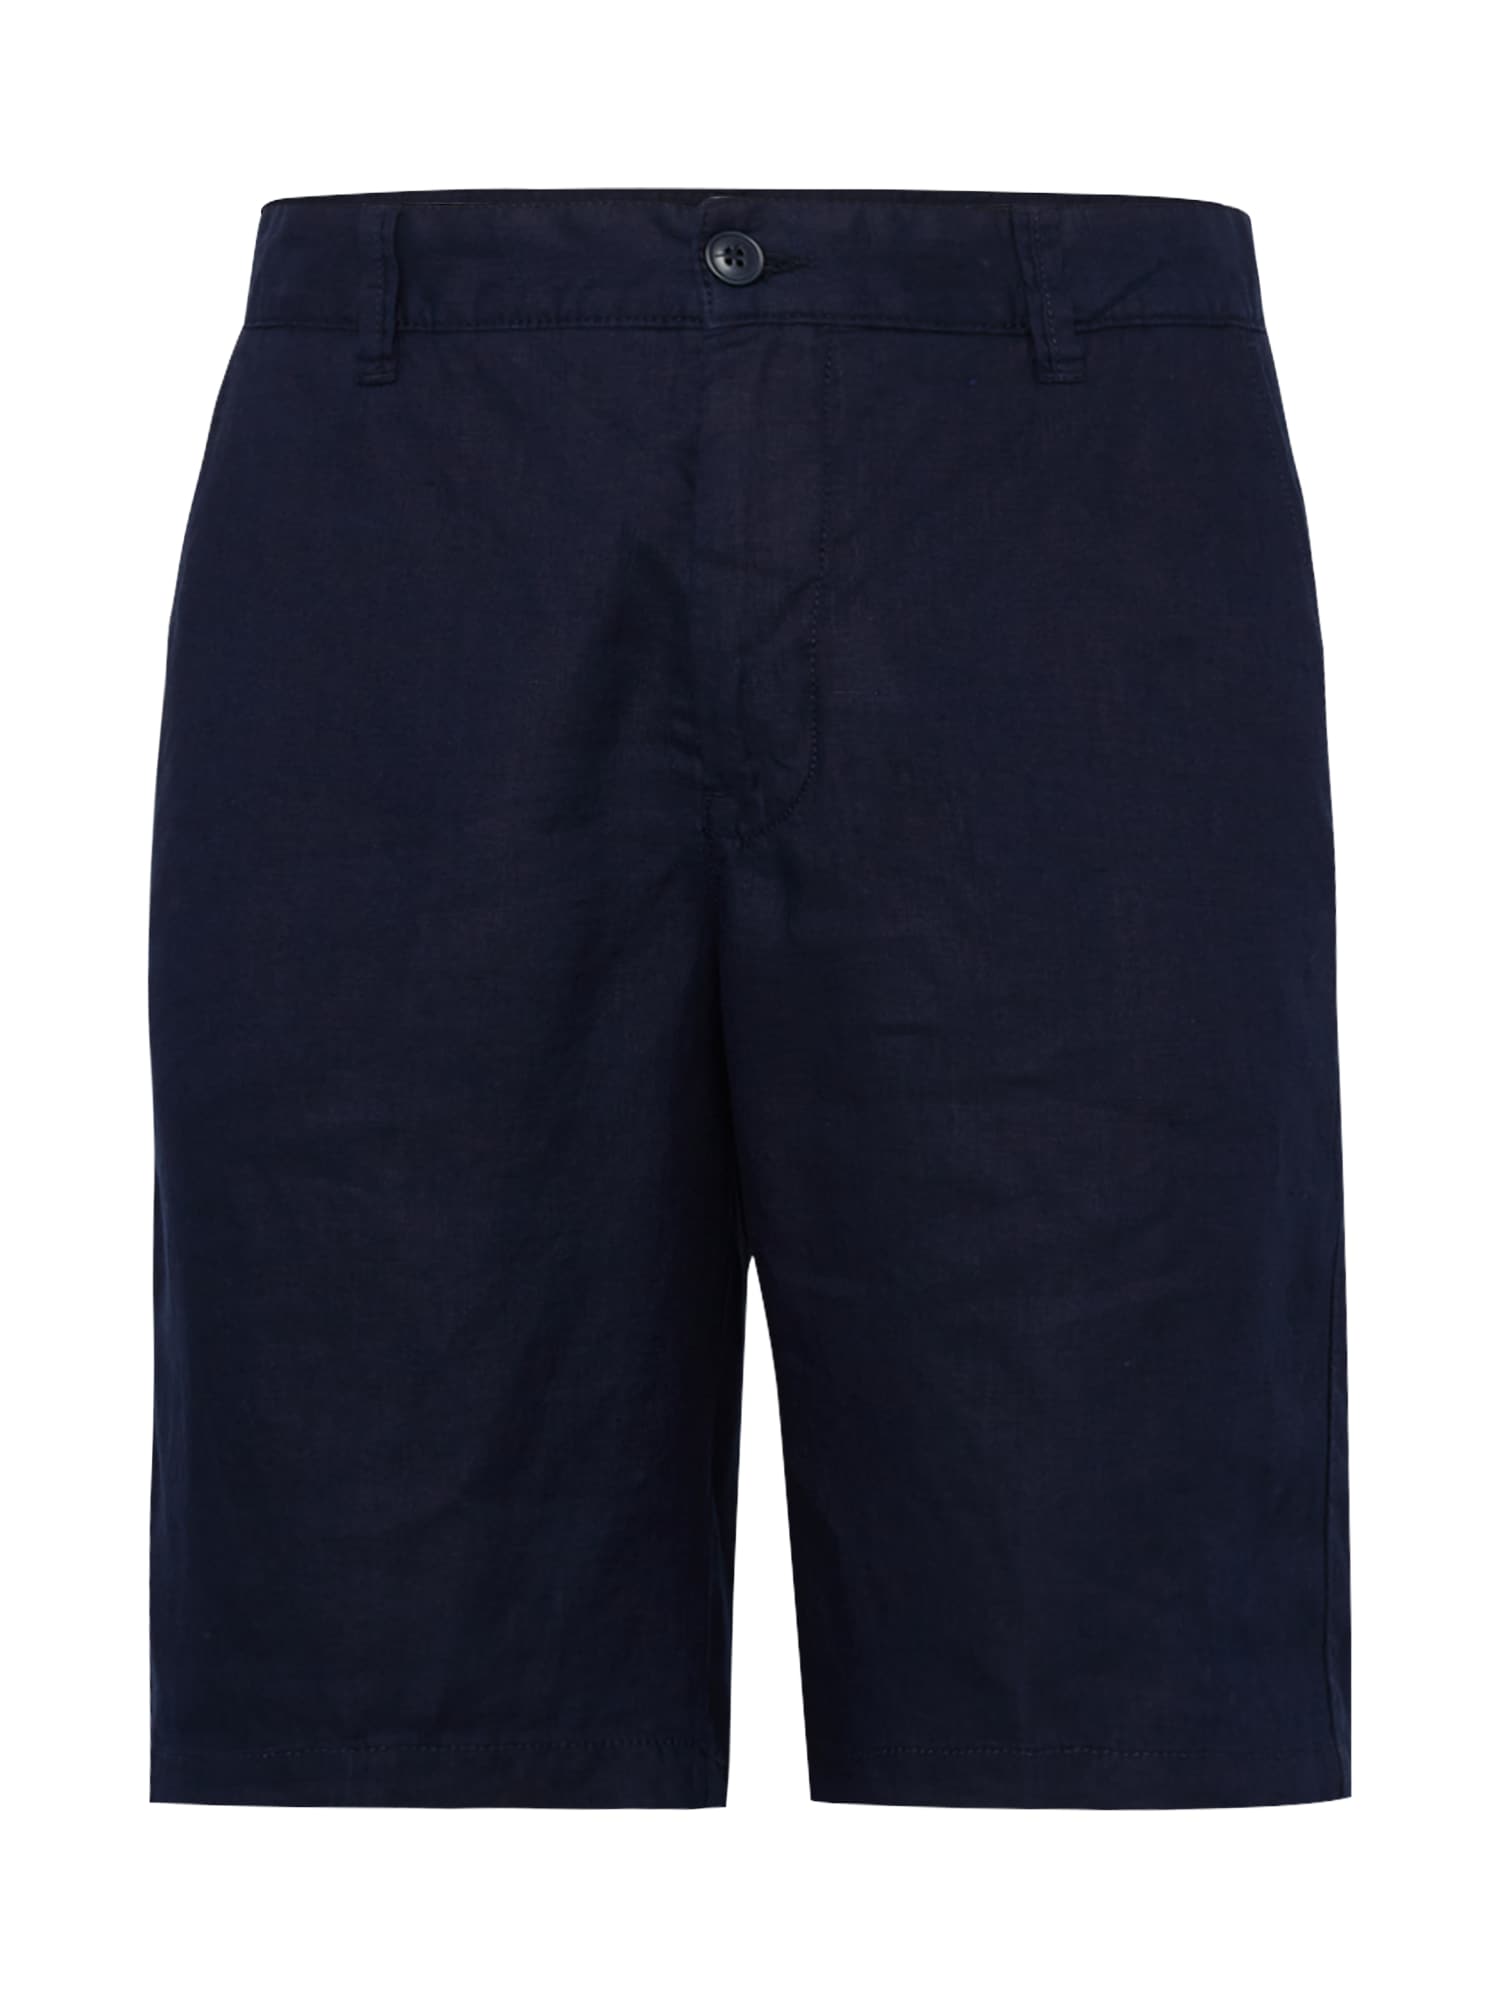 UNITED COLORS OF BENETTON Chino hlače  temno modra